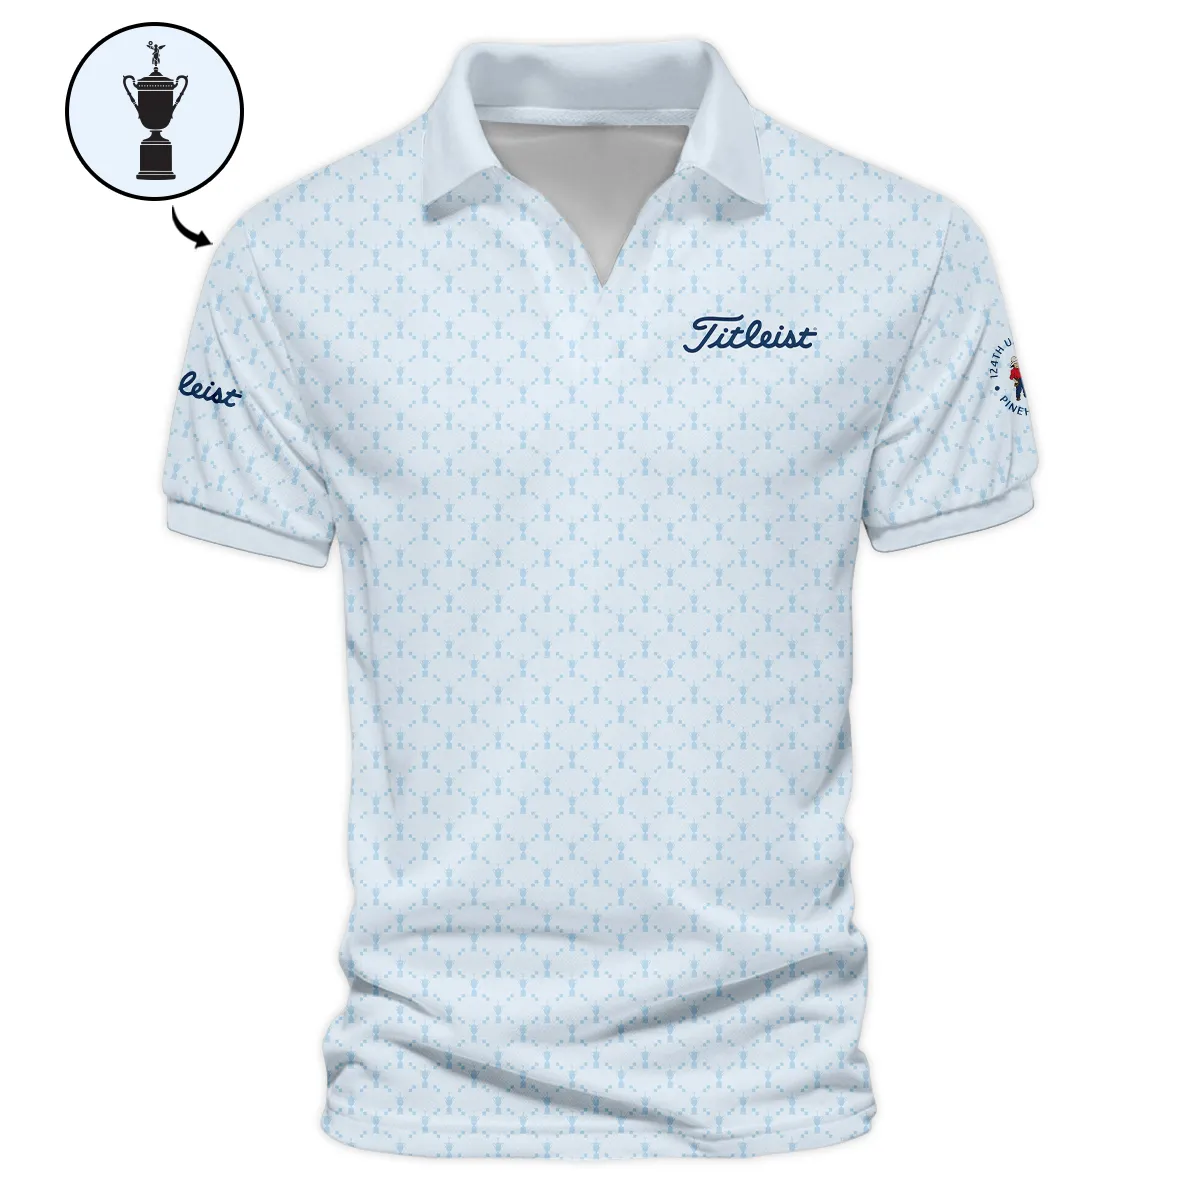 Golf Sport Pattern Blue Sport Uniform 124th U.S. Open Pinehurst Titleist Hoodie Shirt Style Classic